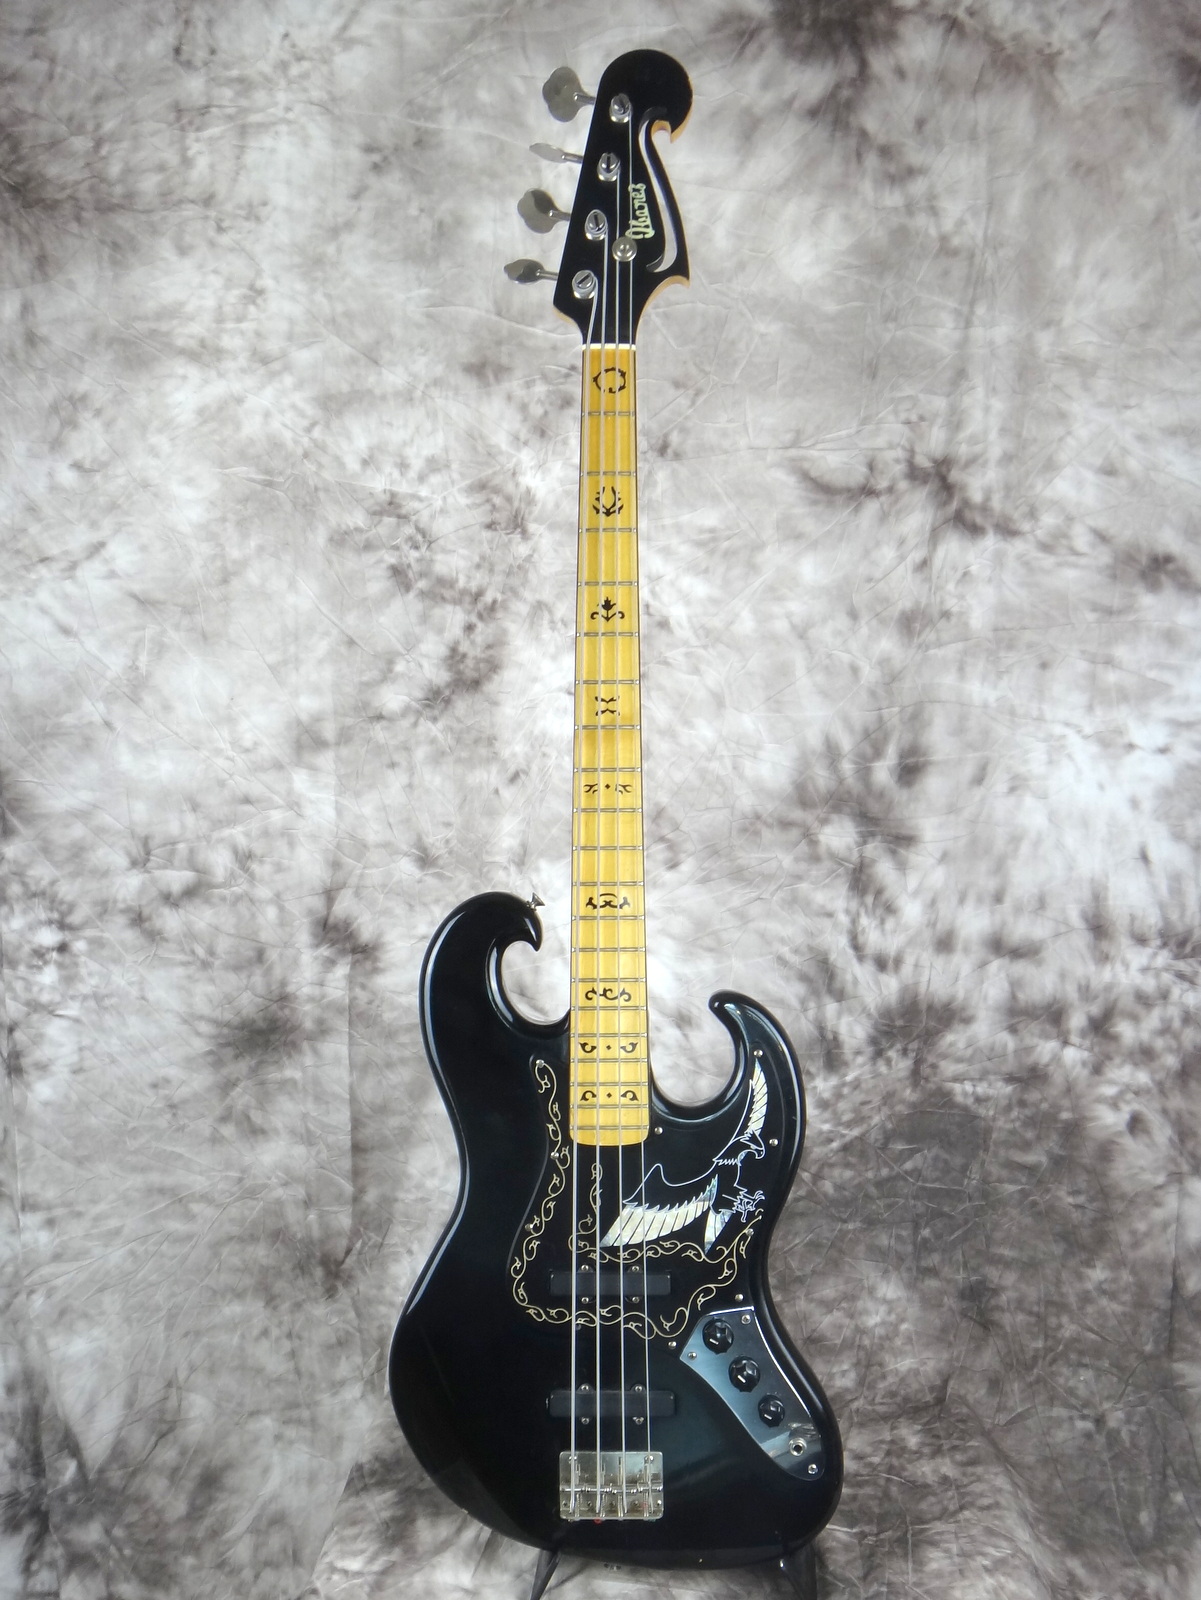 Ibanez-Black-Eagle-Bass-1977-001.JPG